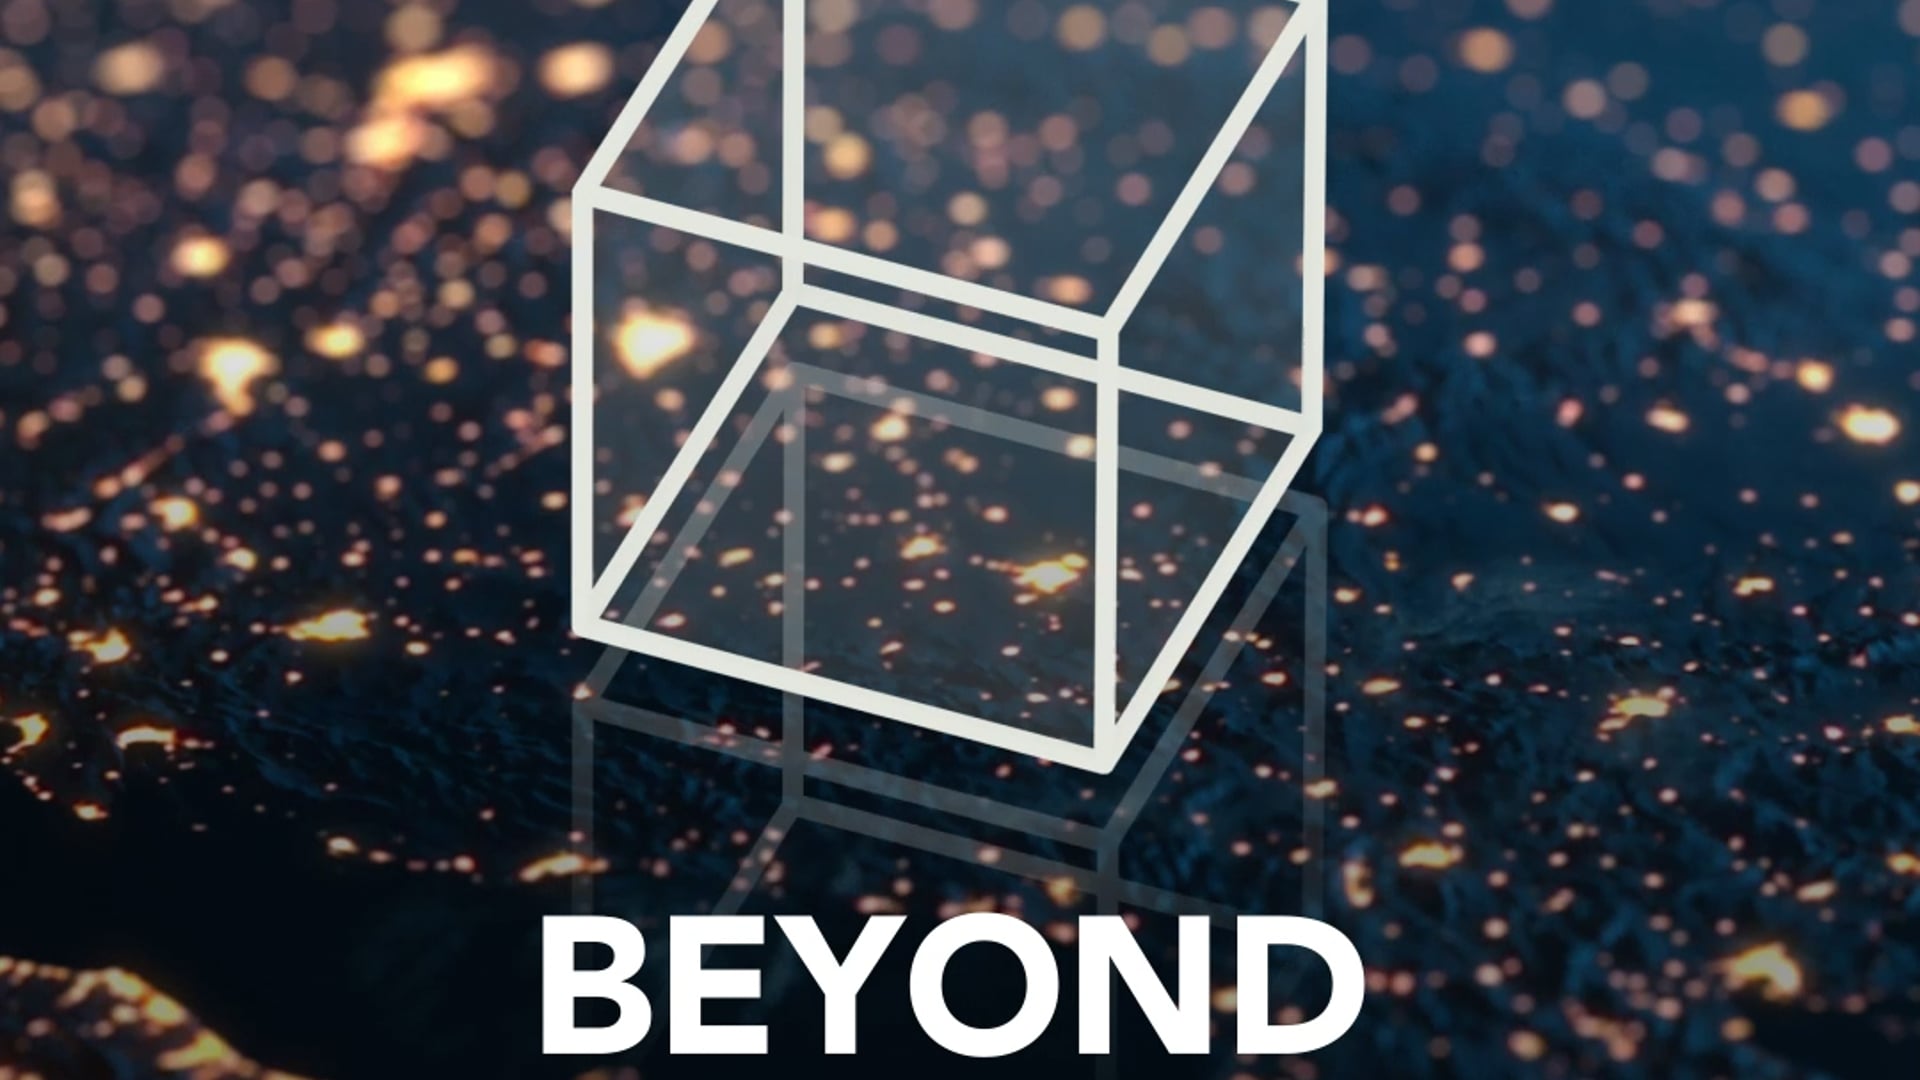 Beyond Strategy: Square Video Loop